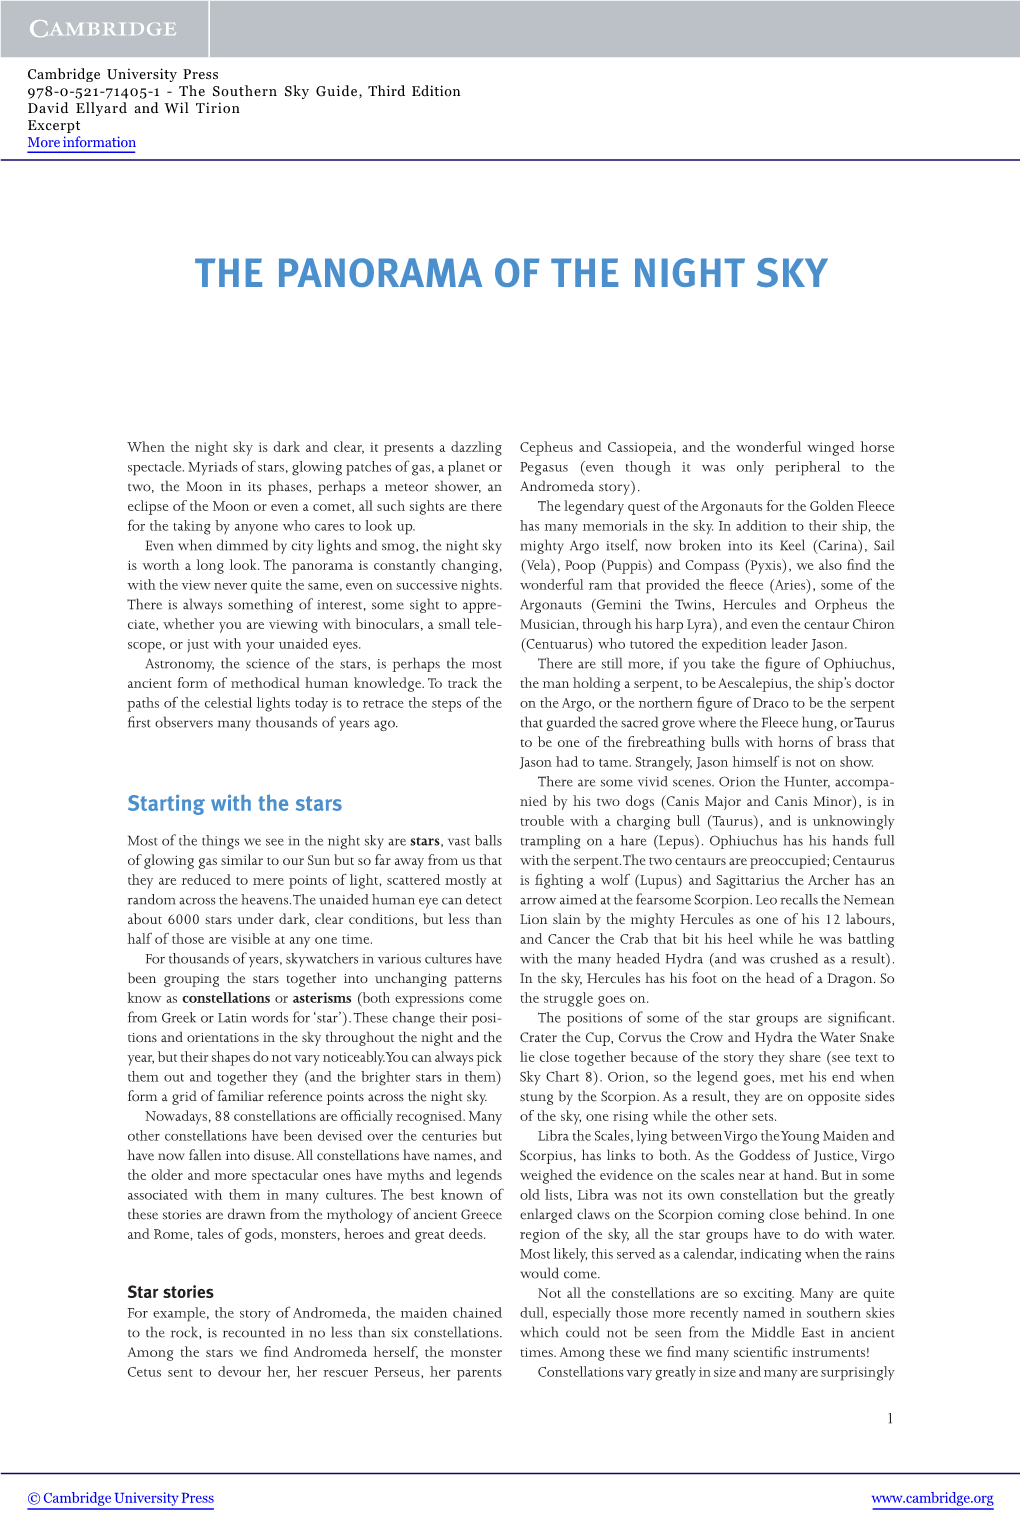 The Panorama of the Night